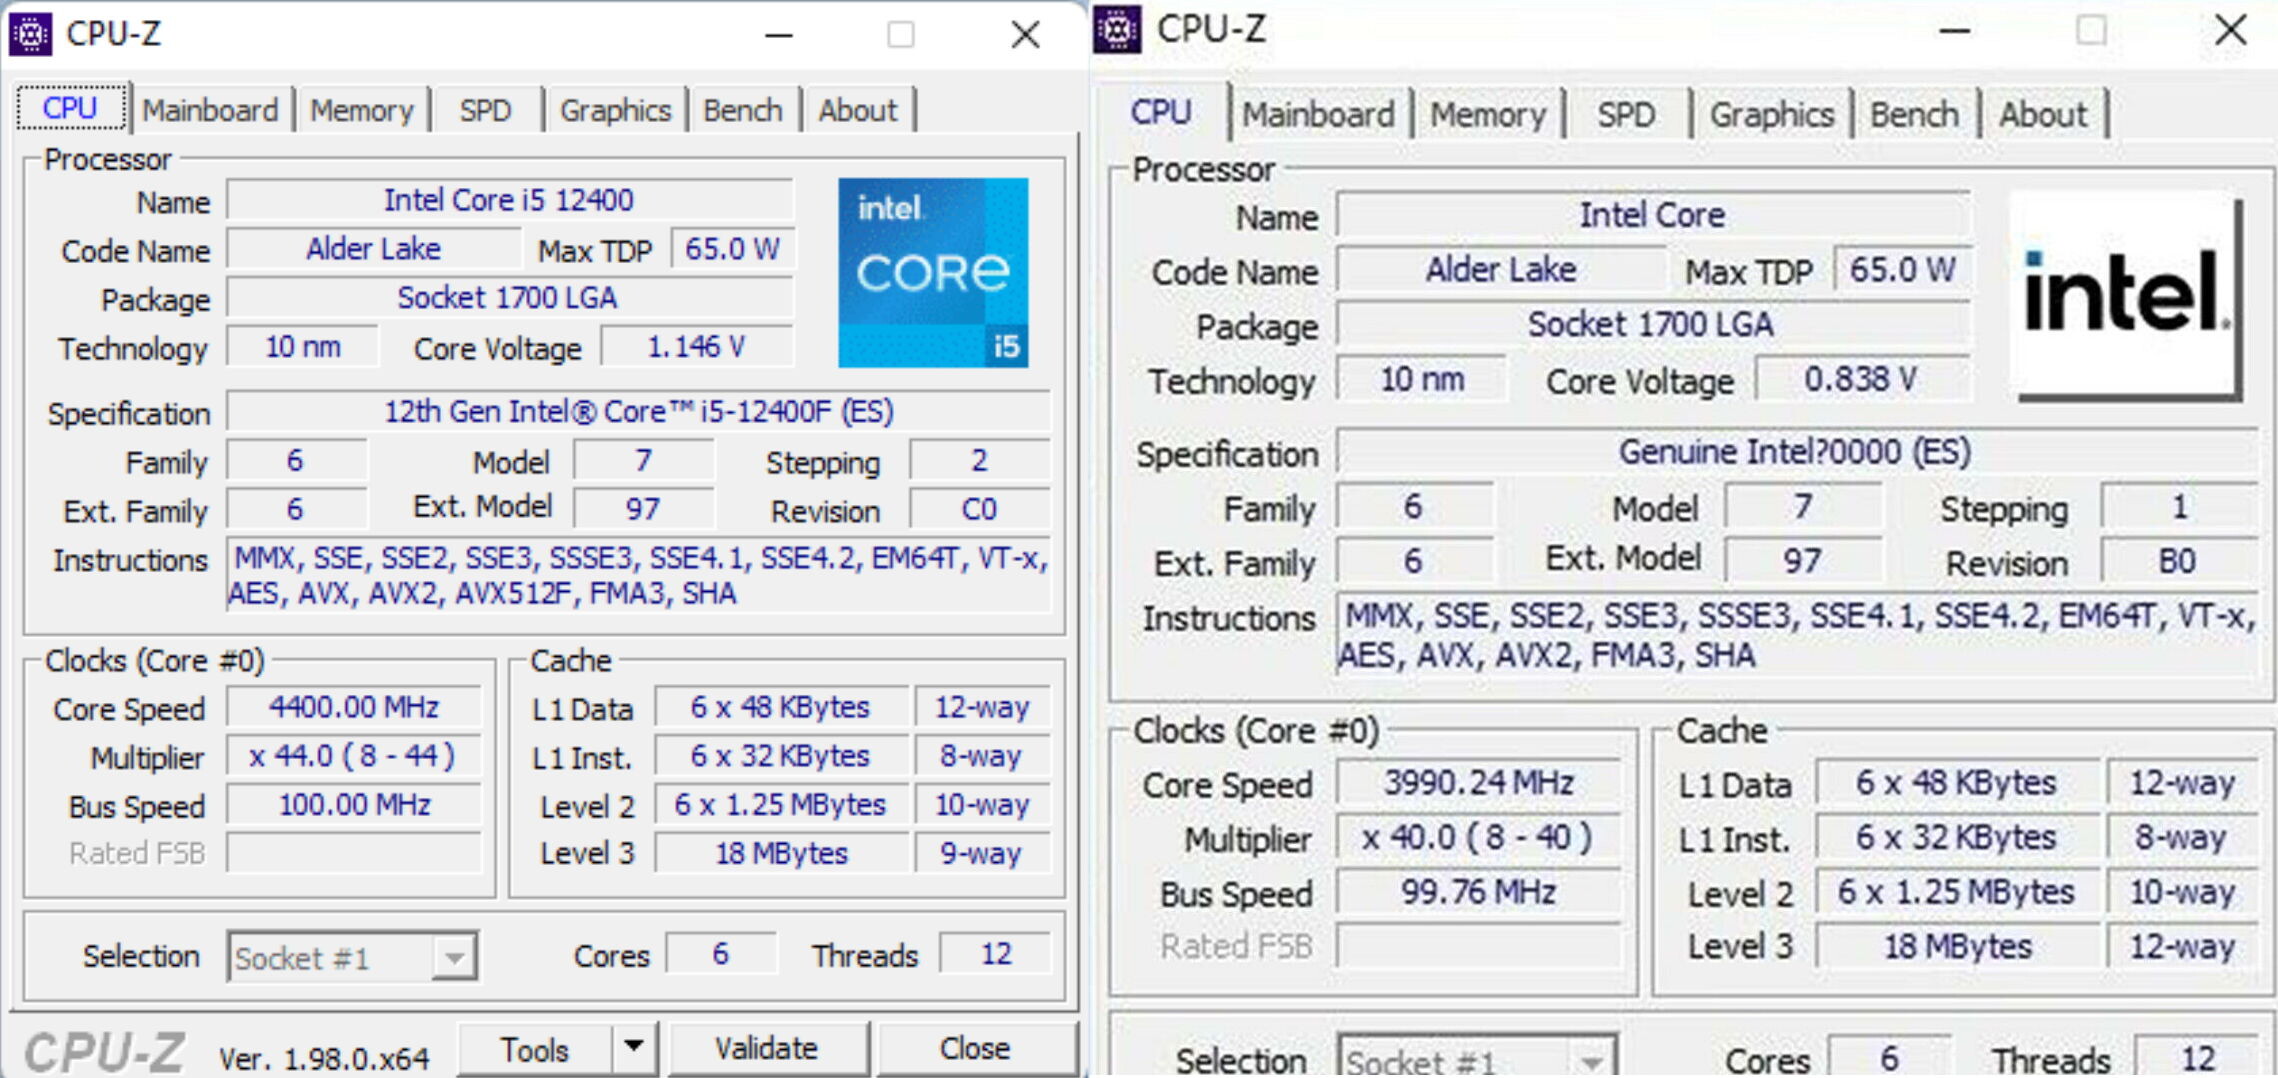 Intel i5 4400. I5 12400f CPUZ. Intel i5 12400. I Core i5 12400f. Intel 5 12400.